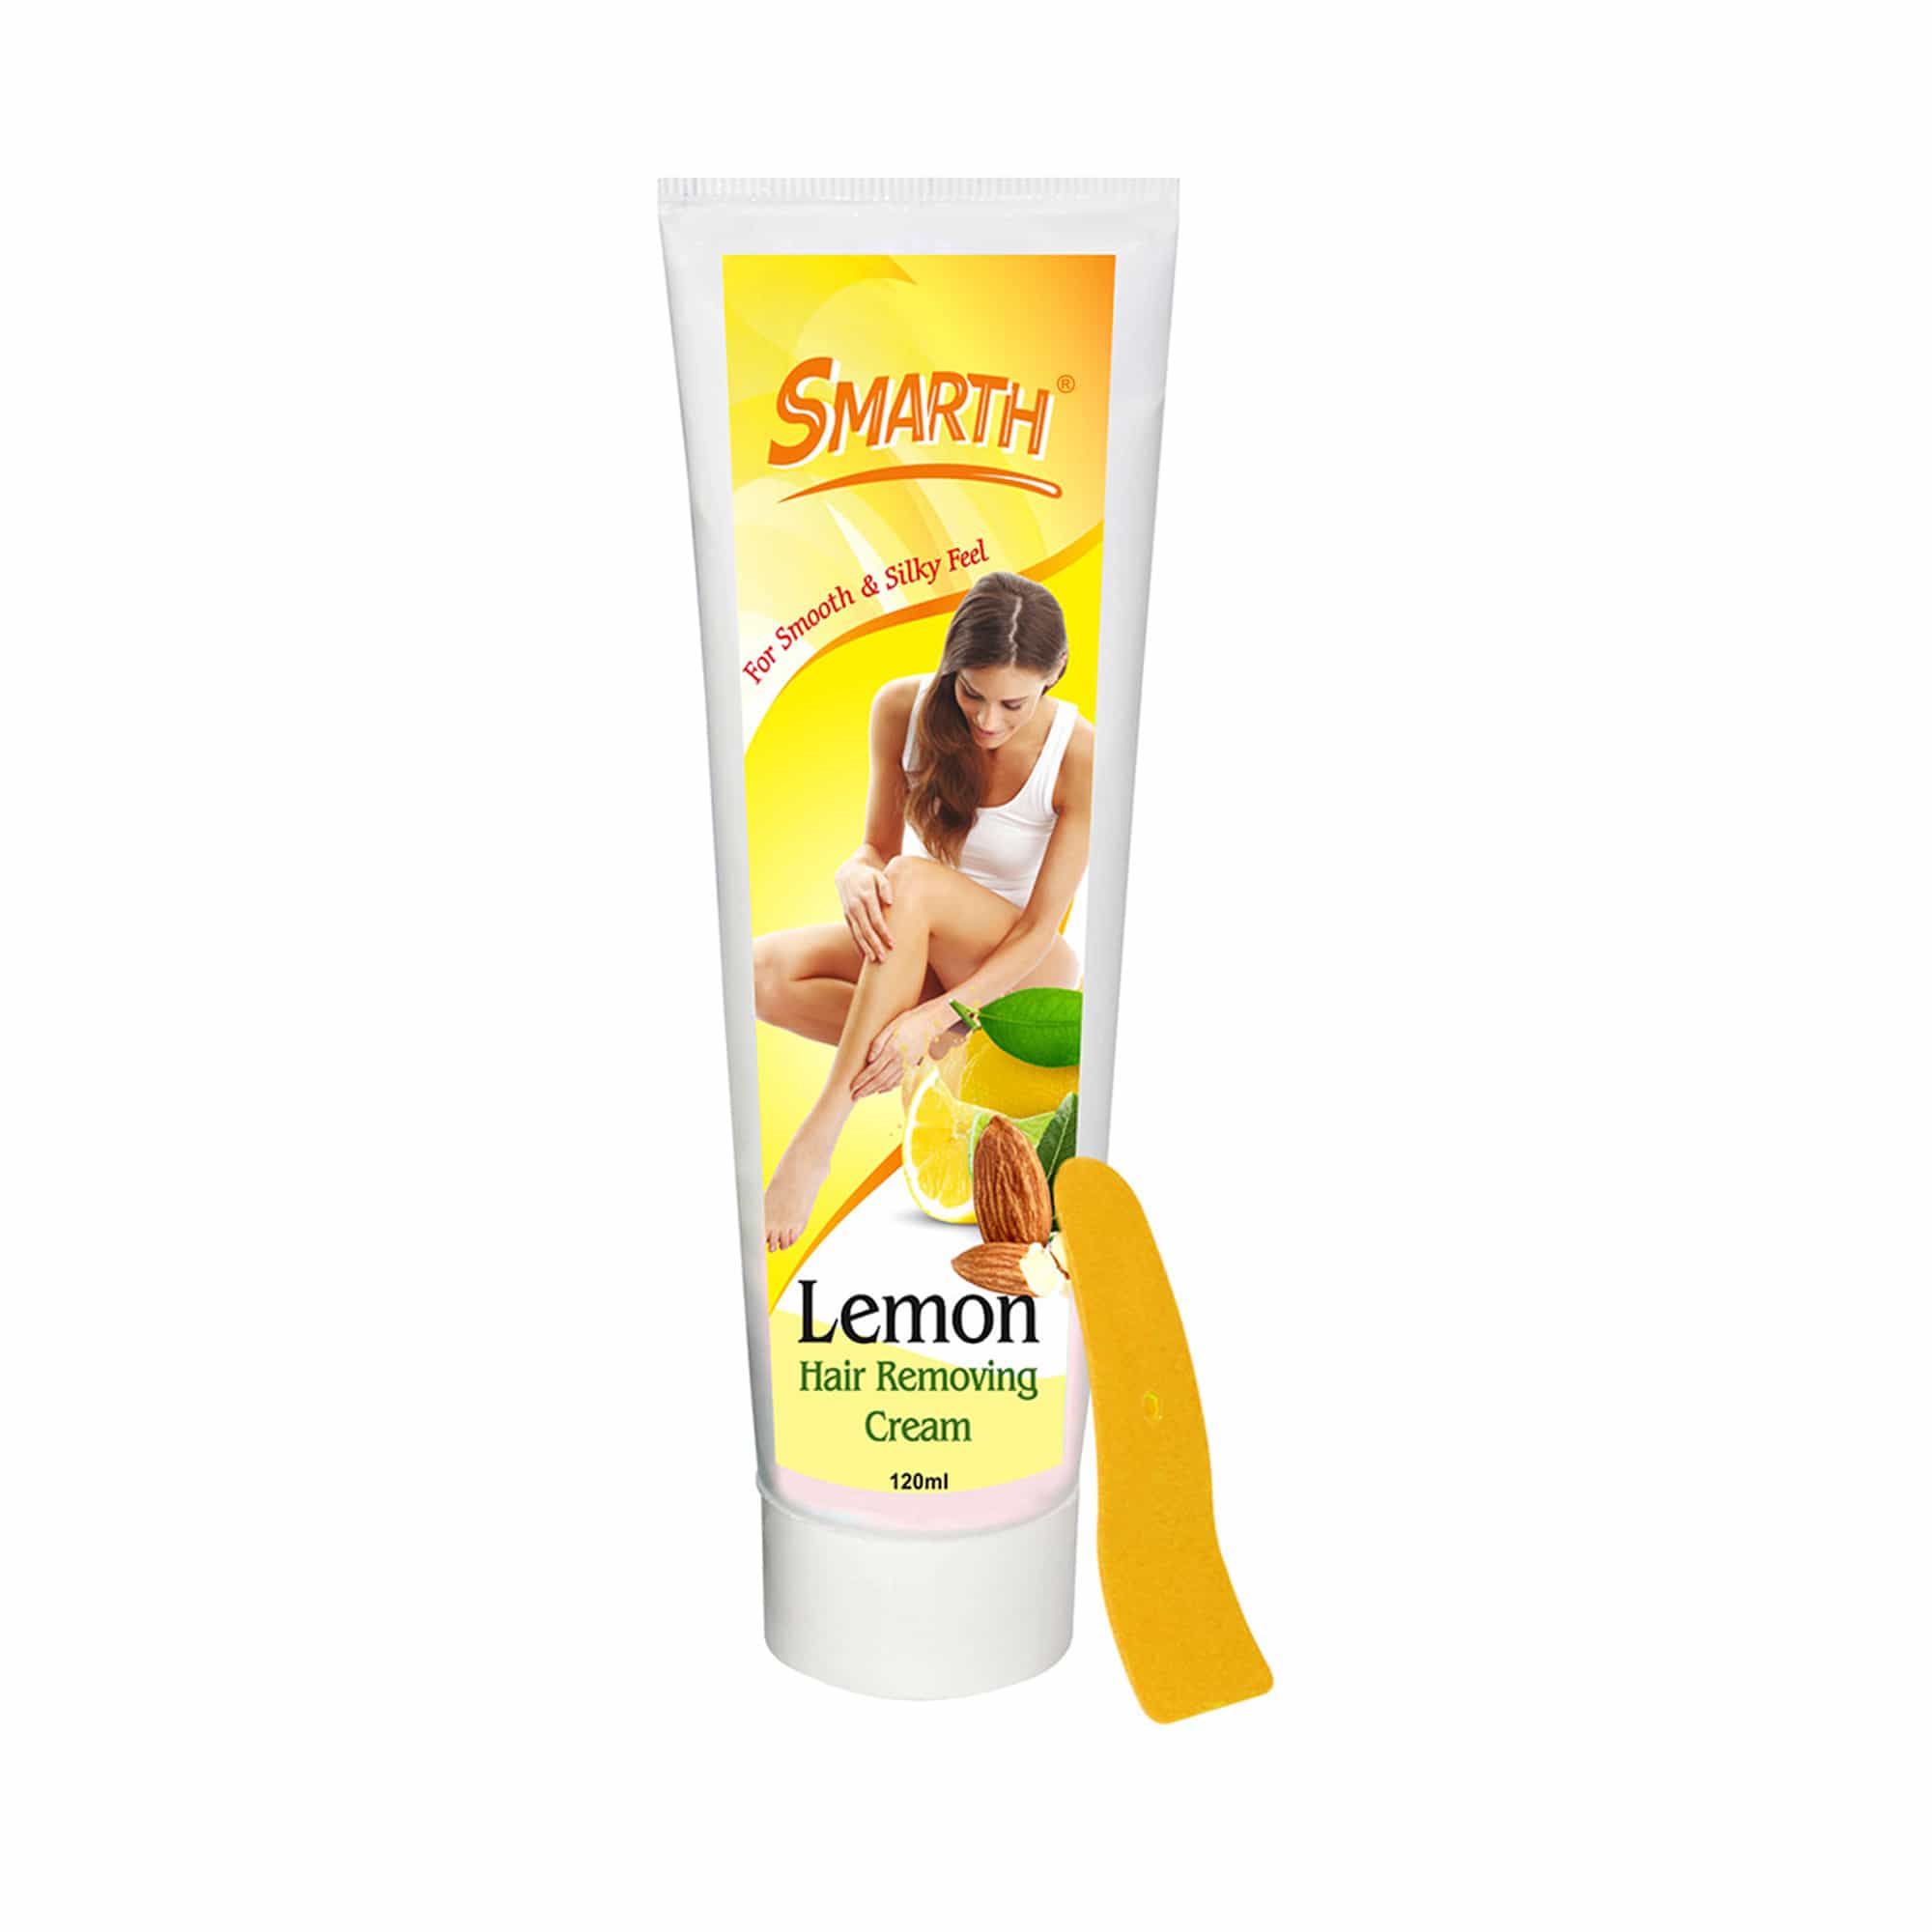 Lemon Hair Removing Cream